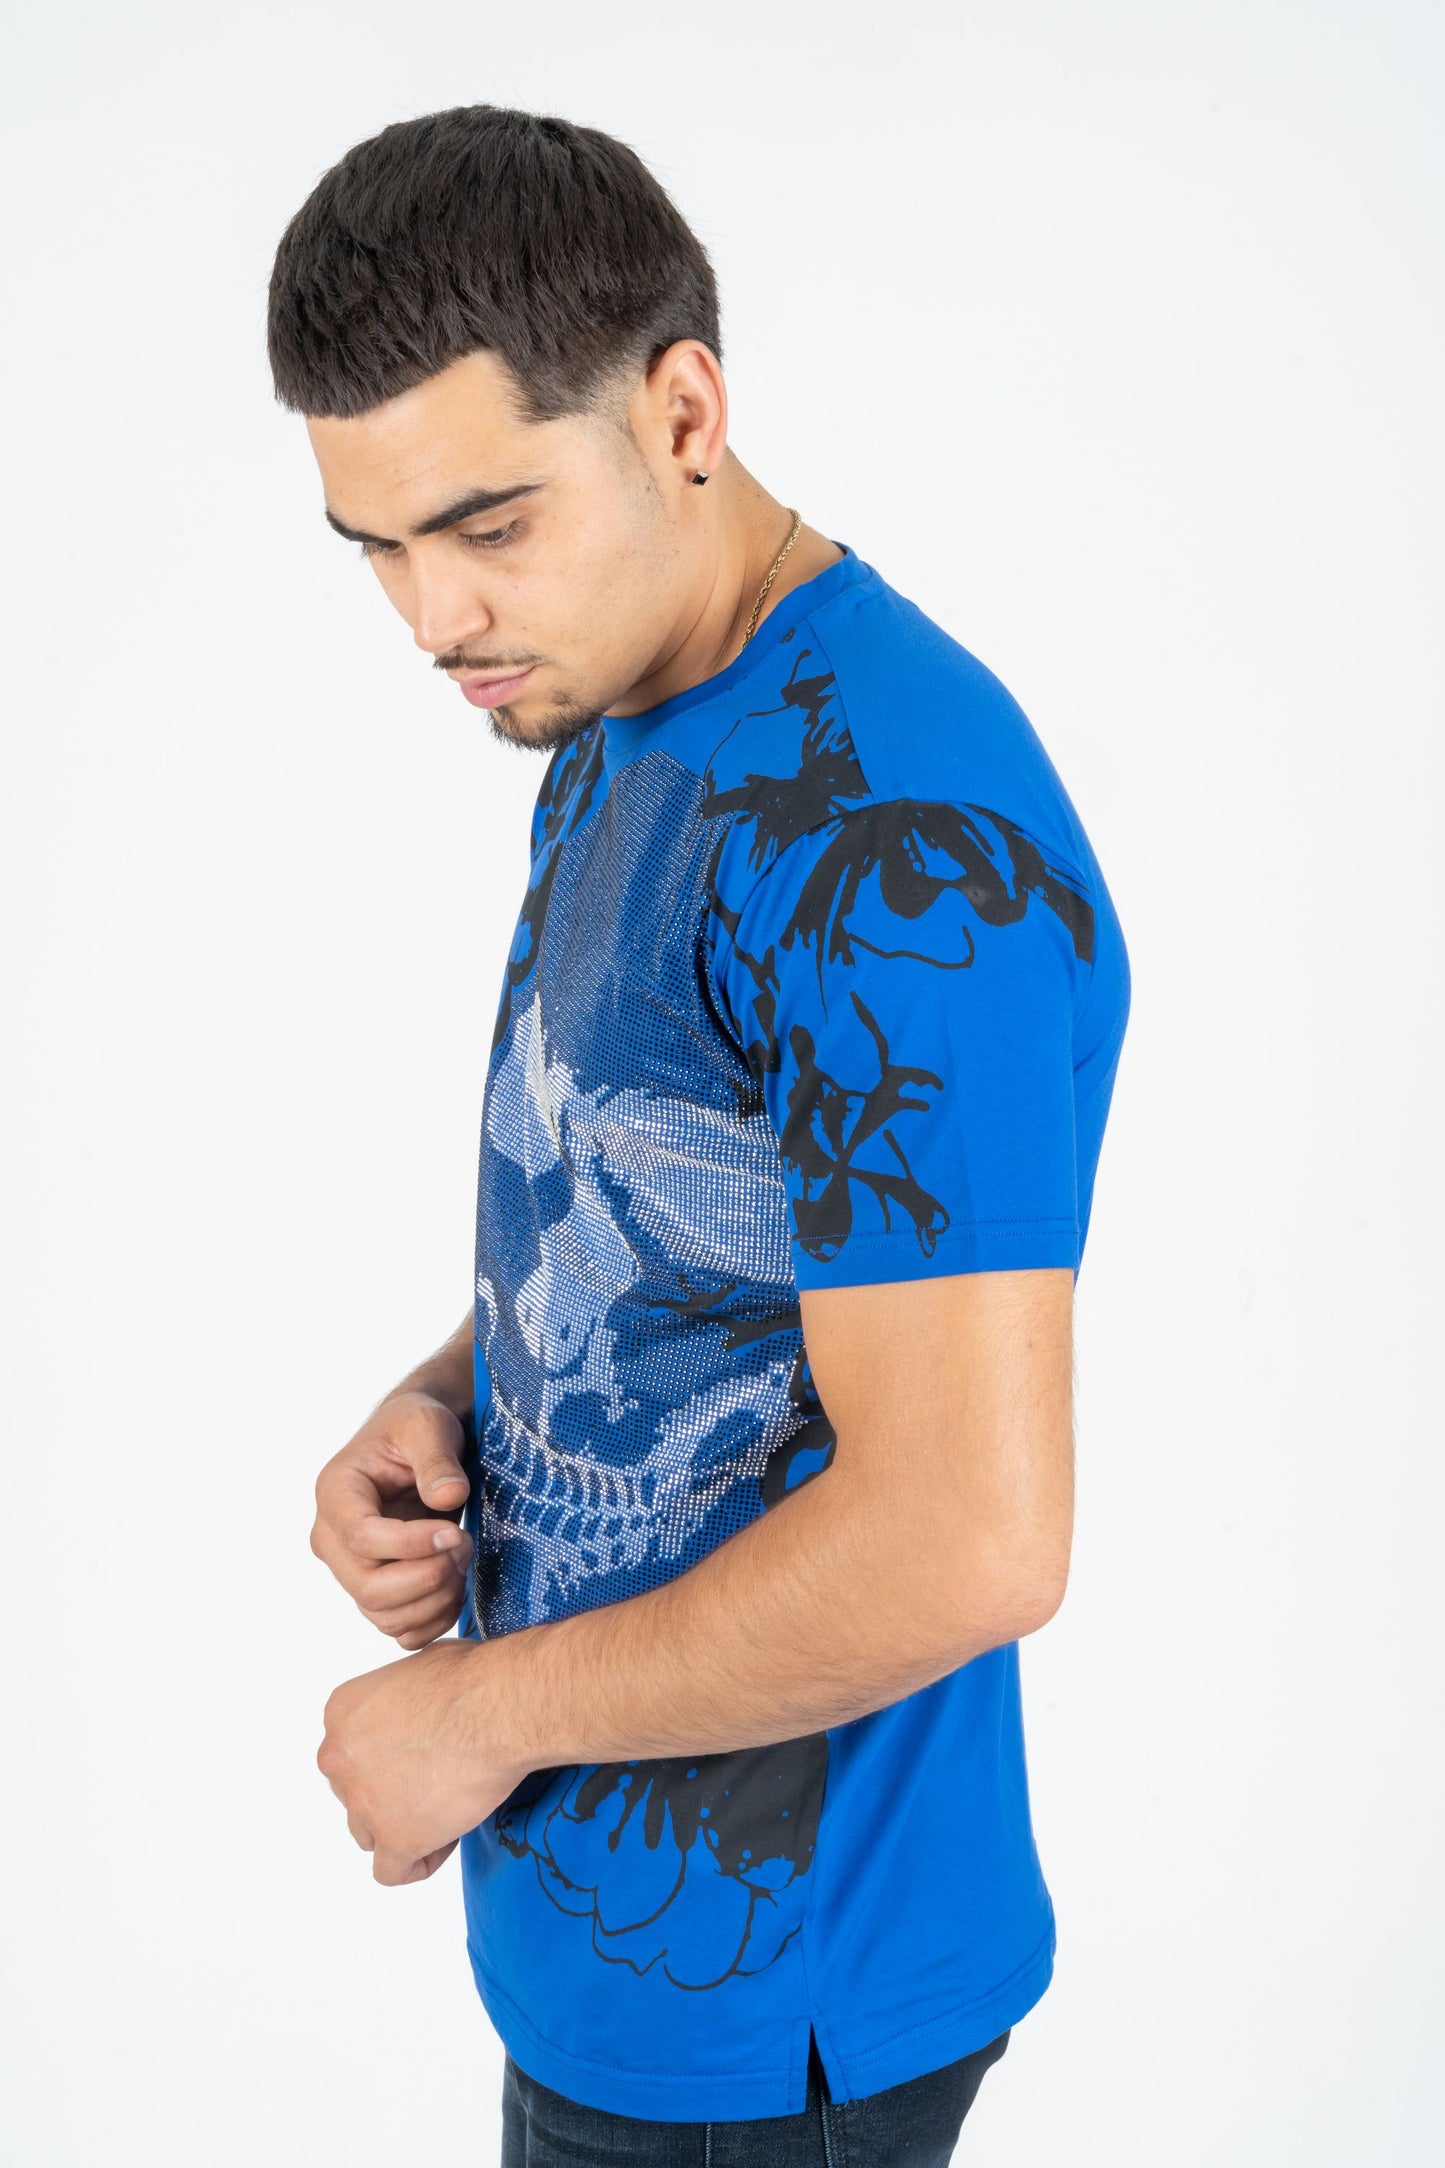 Men's Cotton Royal Blue Rhinestone T-shirt